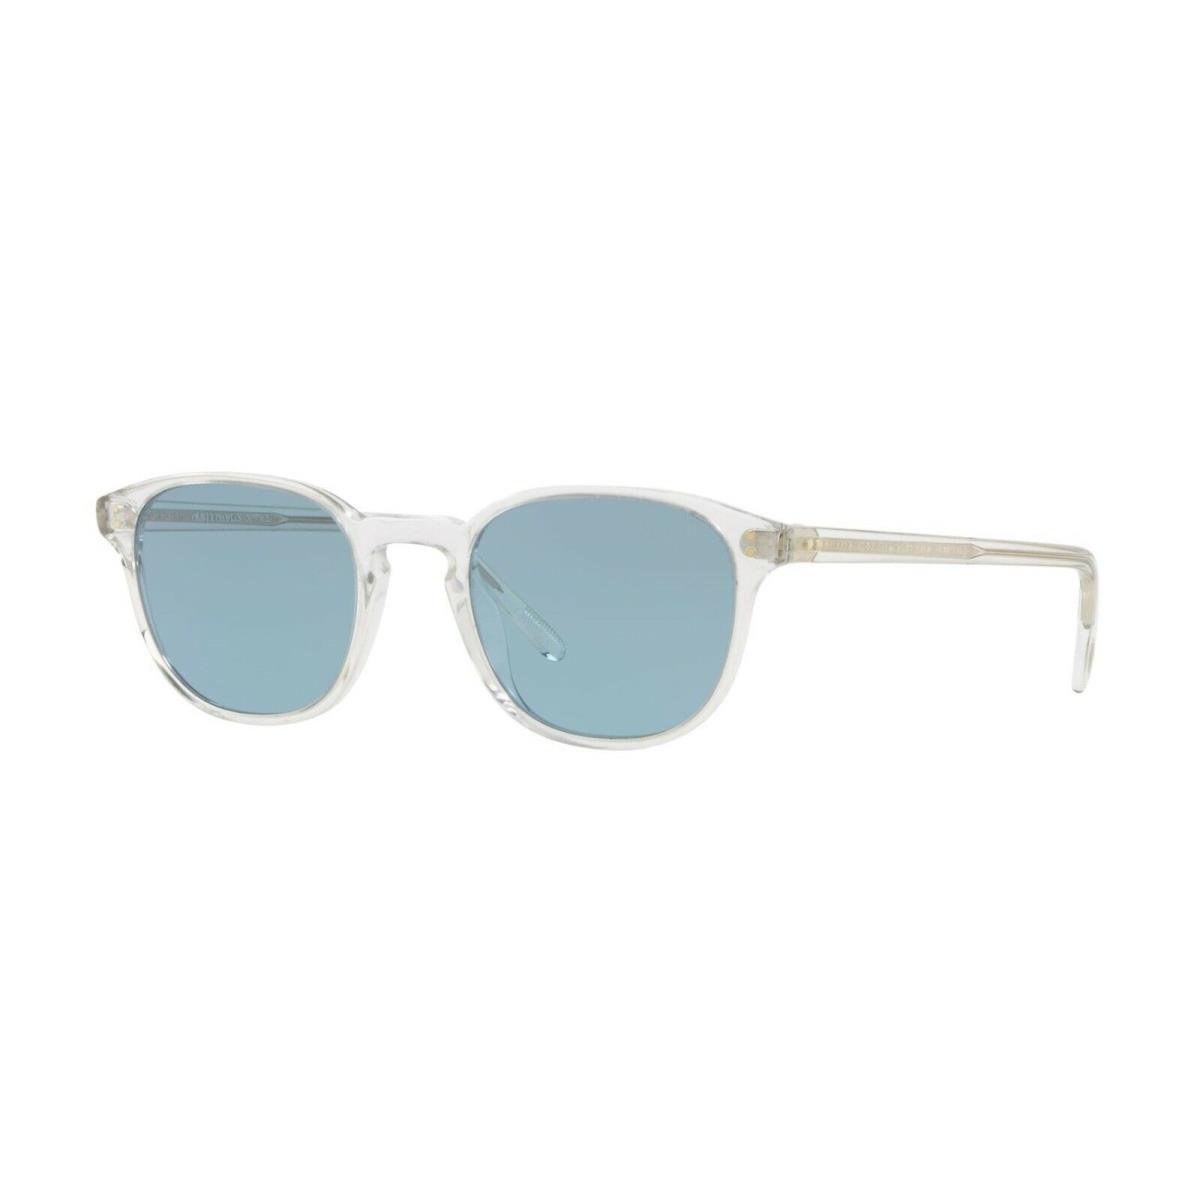 Oliver Peoples Fairmont OV 5219S Crystal/cobalto 1101/56 Sunglasses - Frame: Clear, Lens: Blue